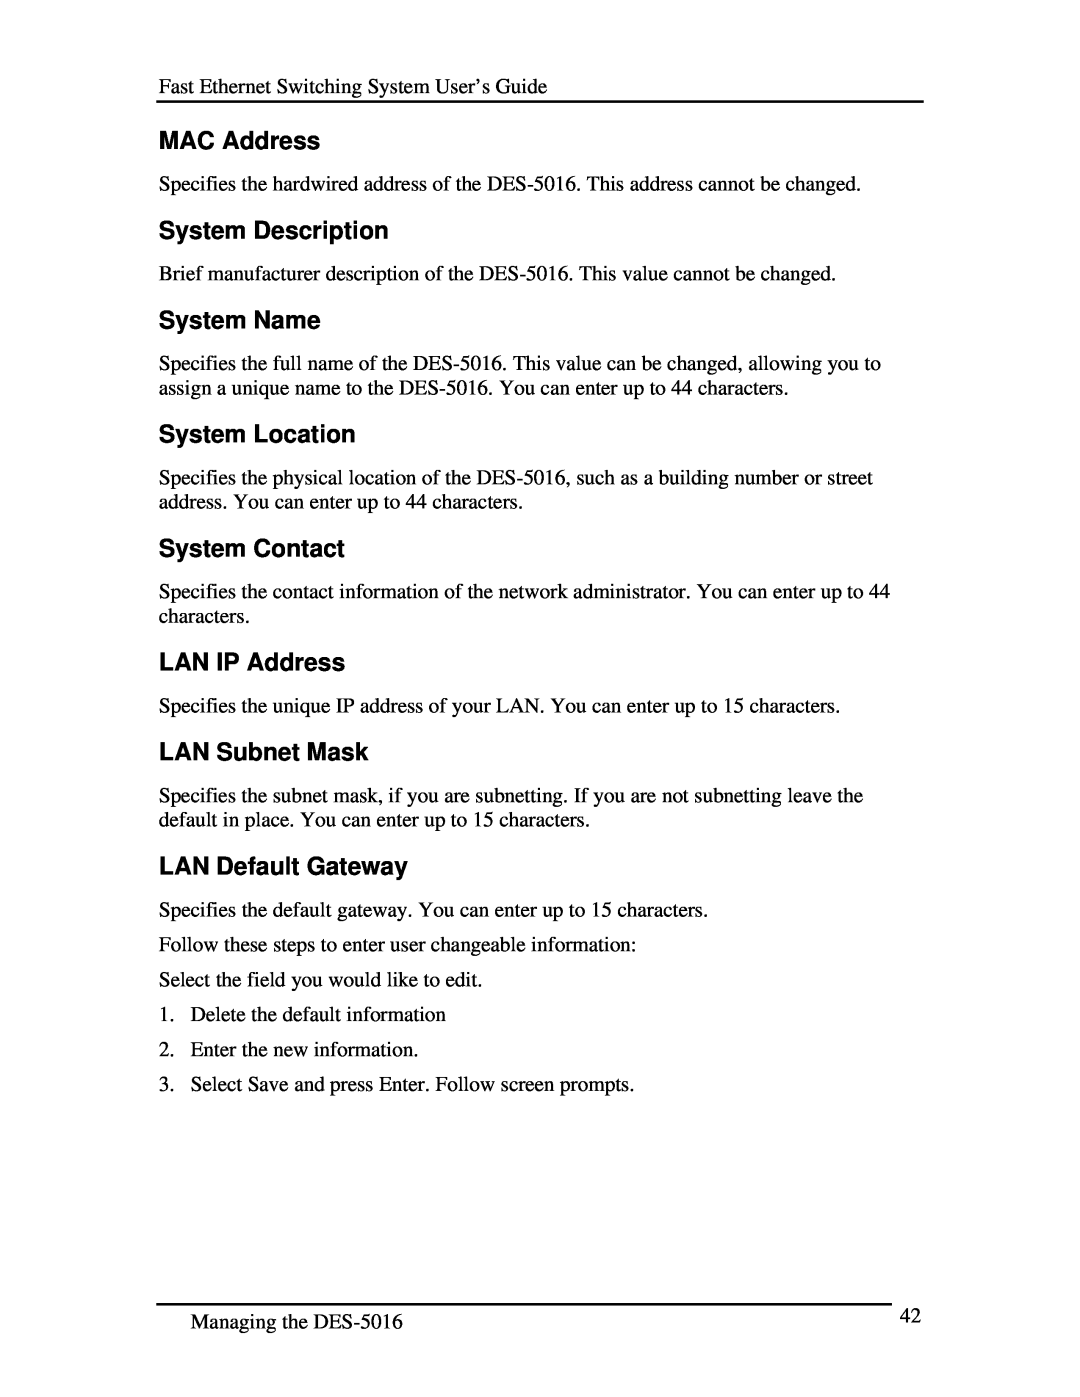 D-Link DES-5016 manual MAC Address, System Description, System Name, System Location, System Contact, LAN IP Address 